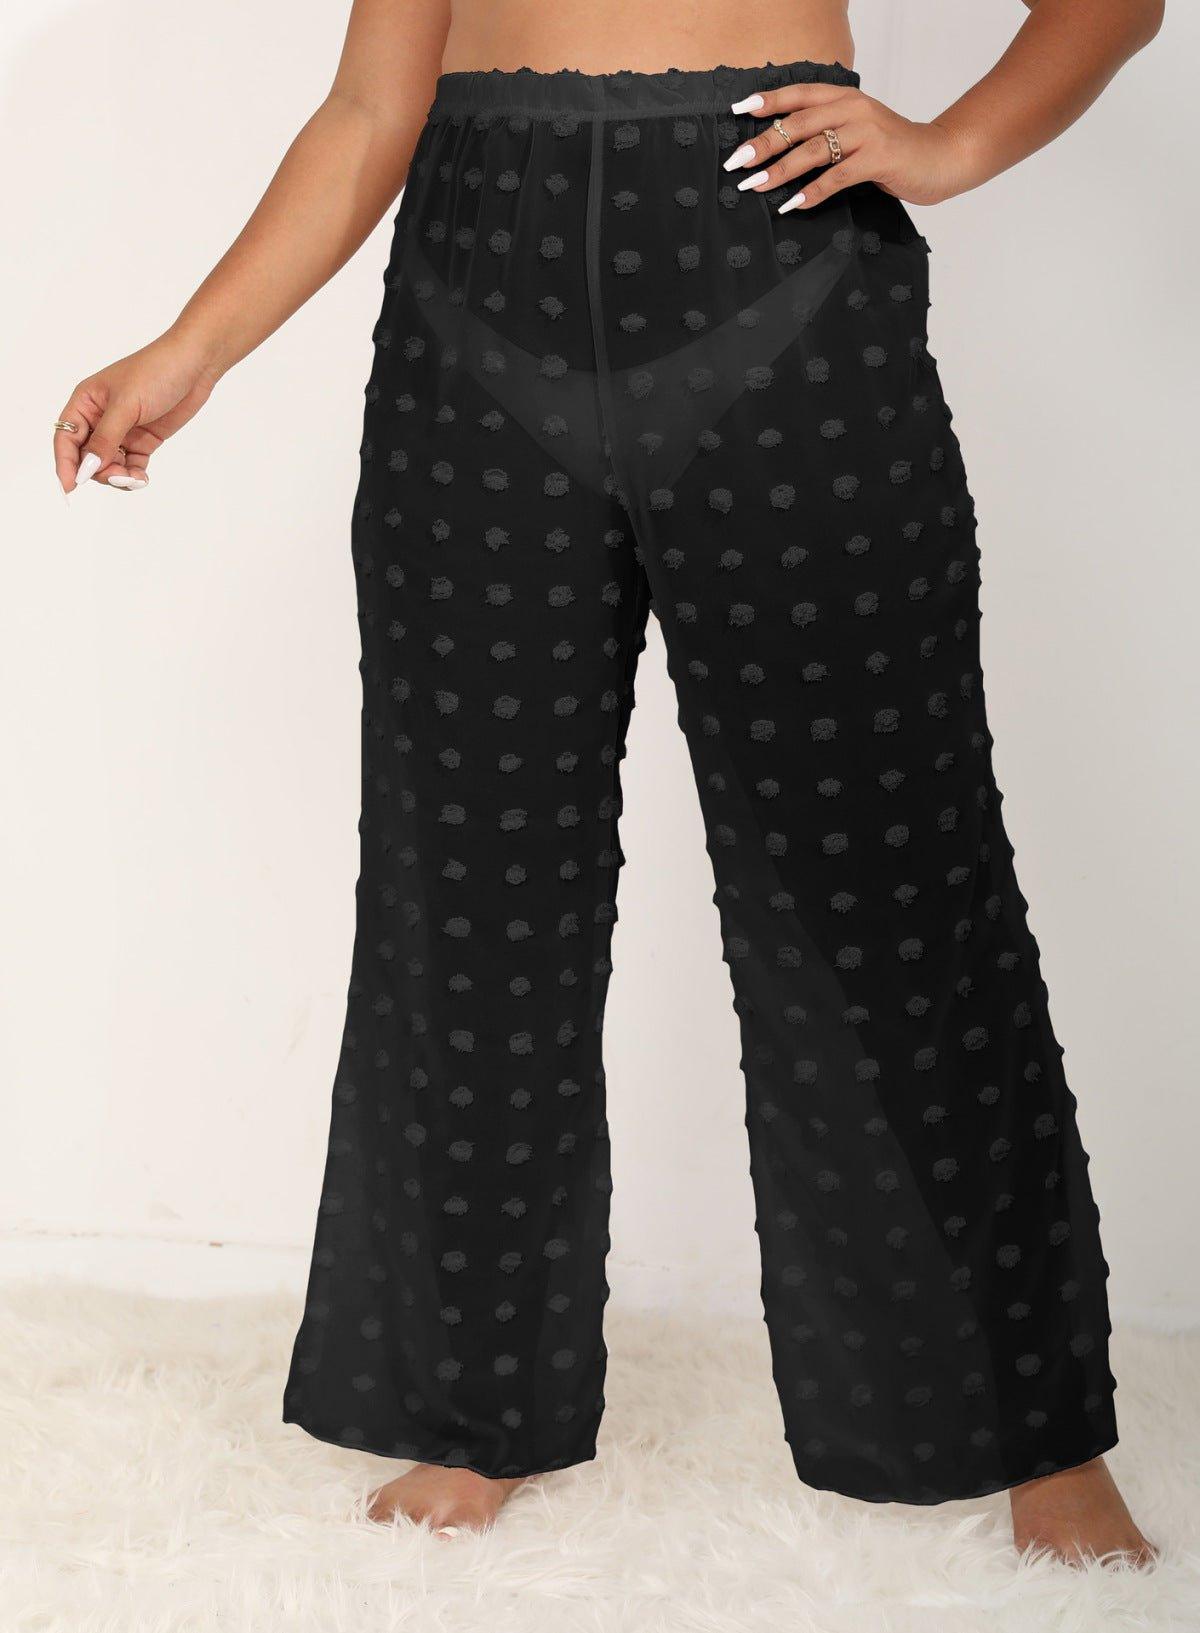 Black Plus Size Pants: Tiered Fashion & Wide Leg Style for Women – Jewelry  Bubble